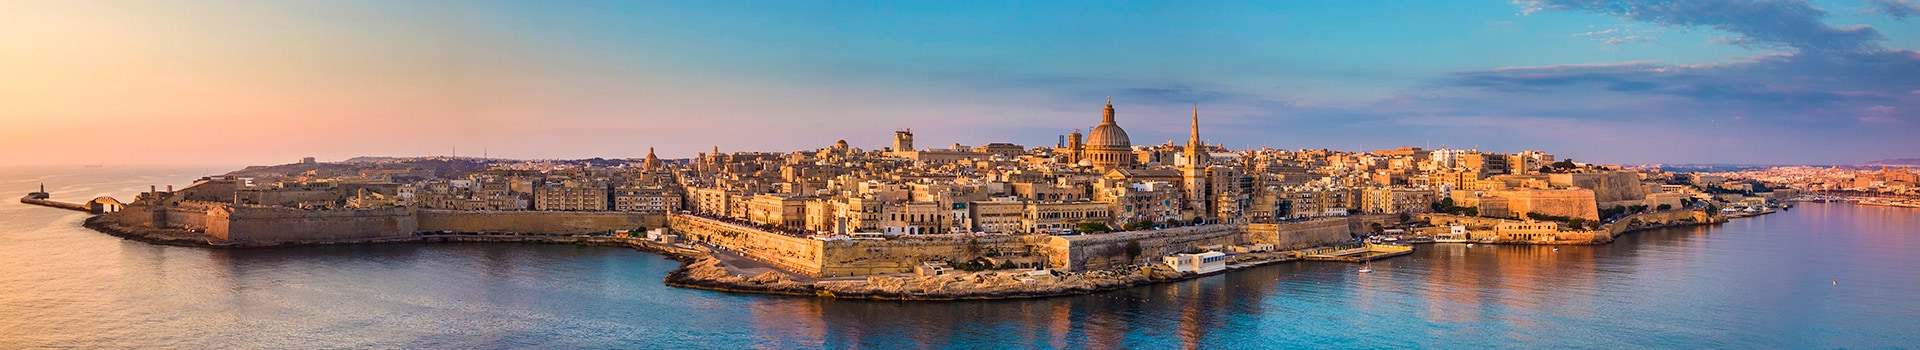 Brindisi - Malta